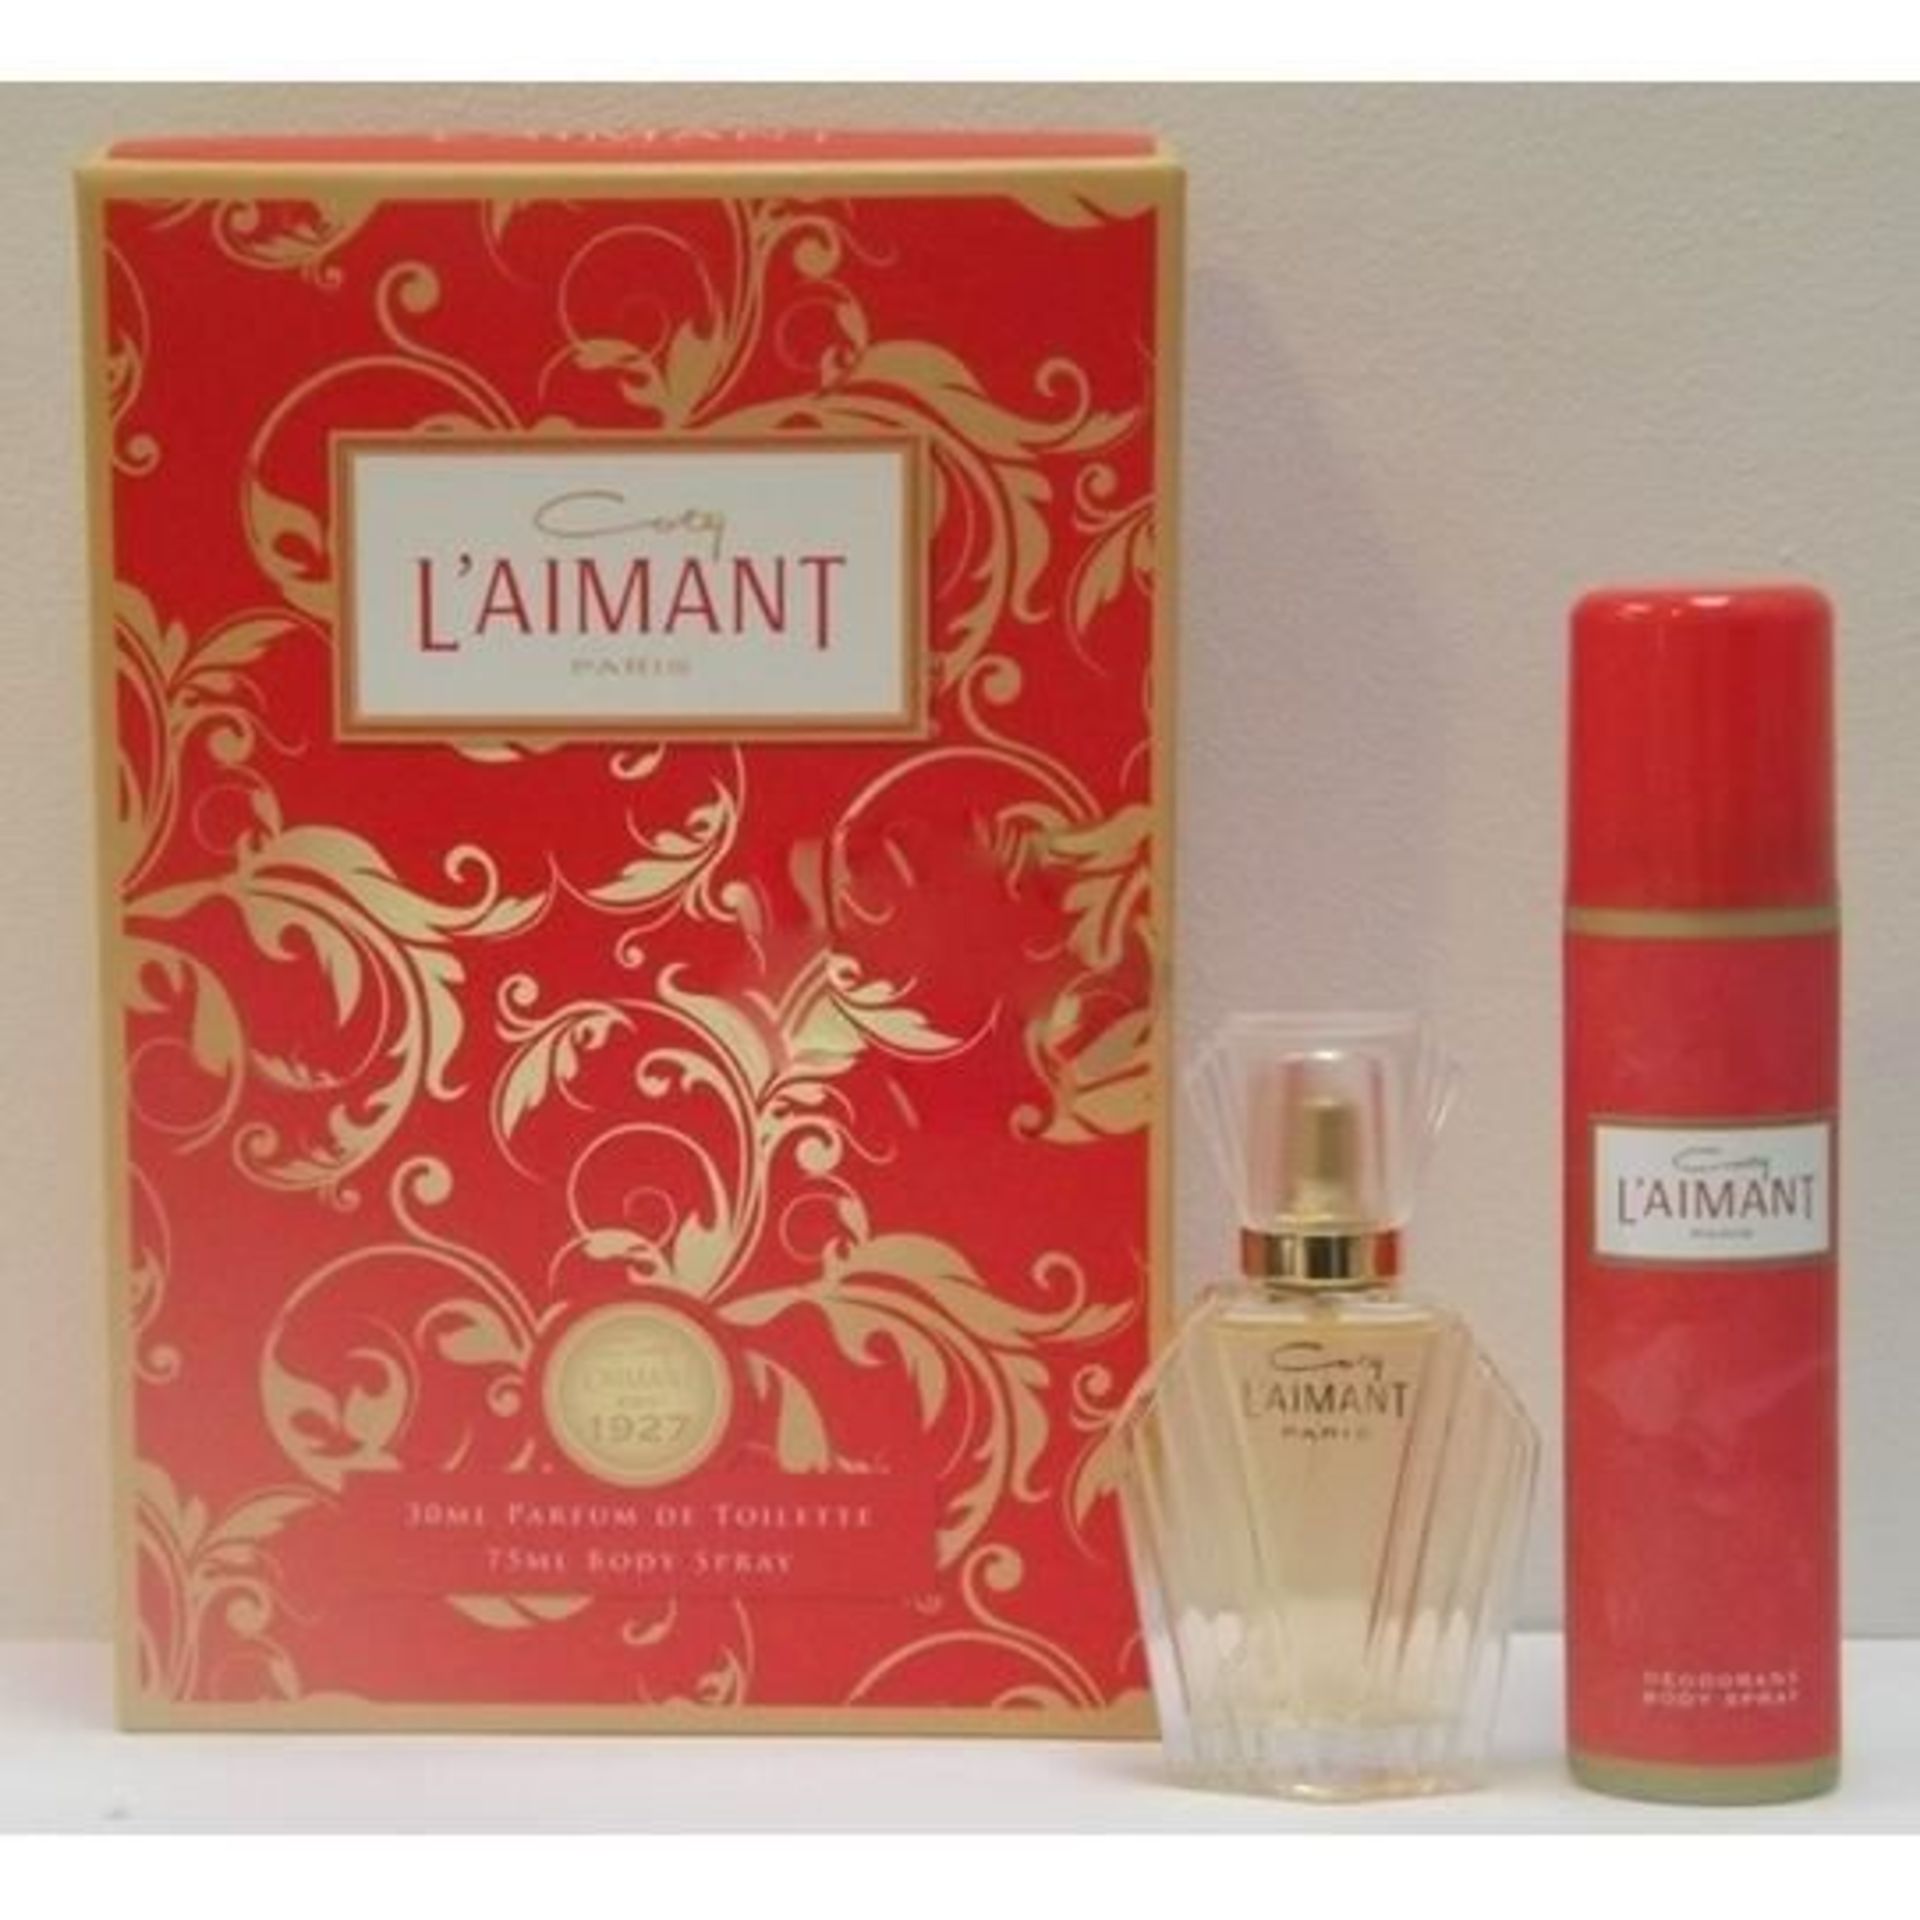 V Coty L'Aimant 30ml Parfum De Toilette And 75ml Body Spray  Gift Set